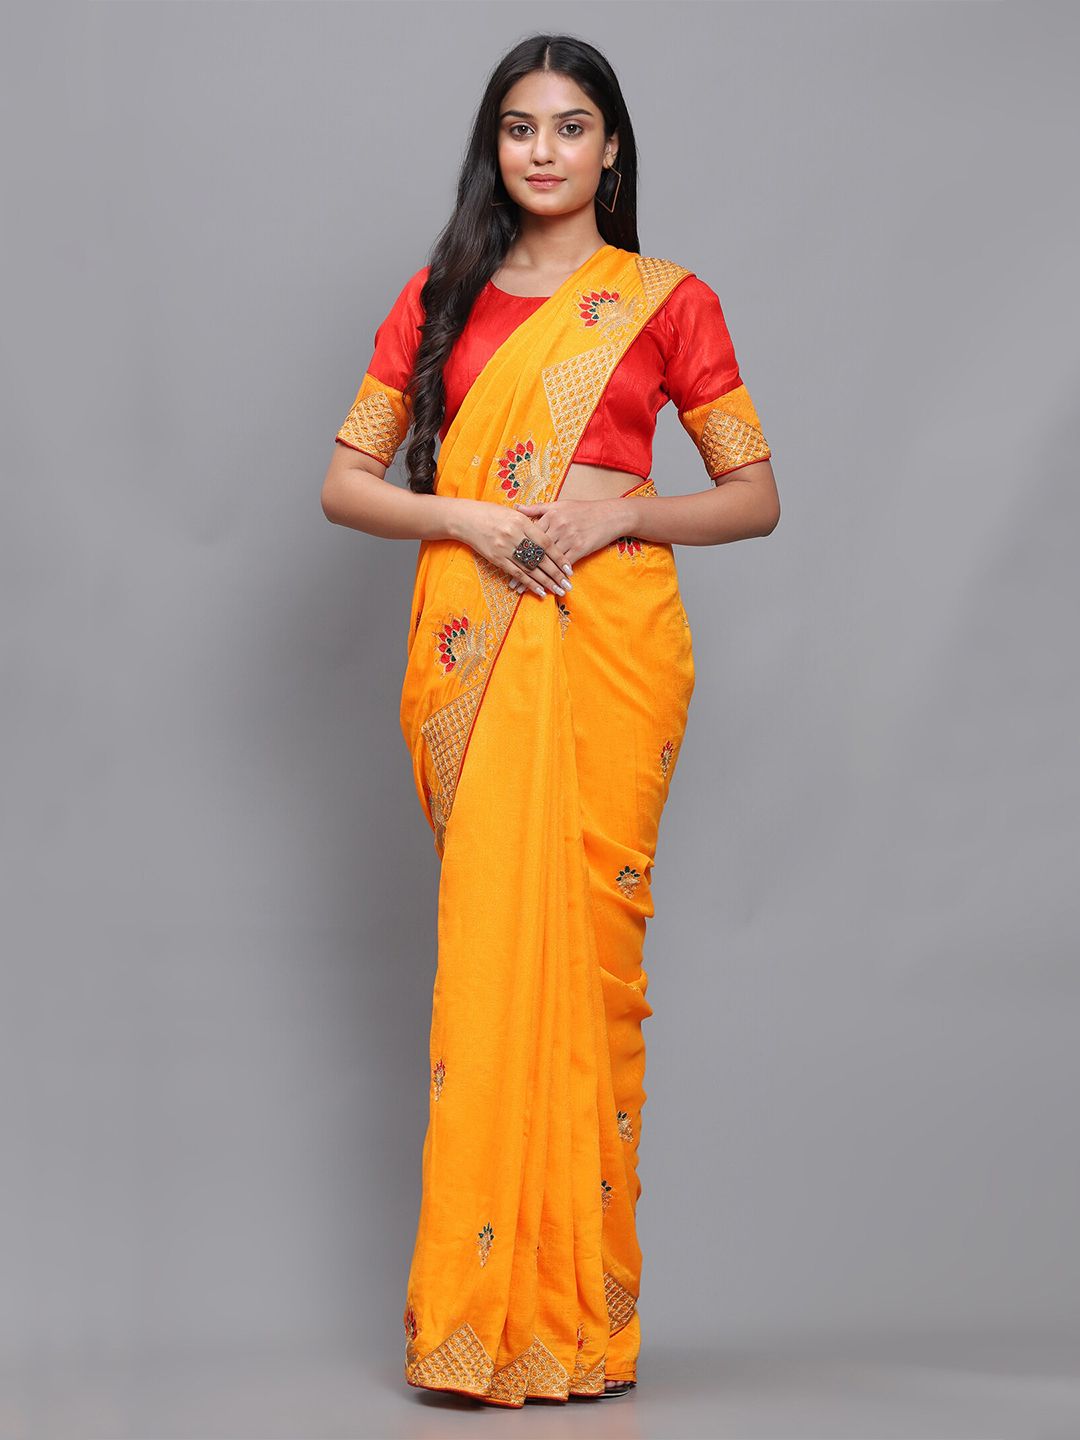 3BUDDY FASHION Yellow & Orange Floral Embroidered Jute Silk Venkatgiri Saree Price in India